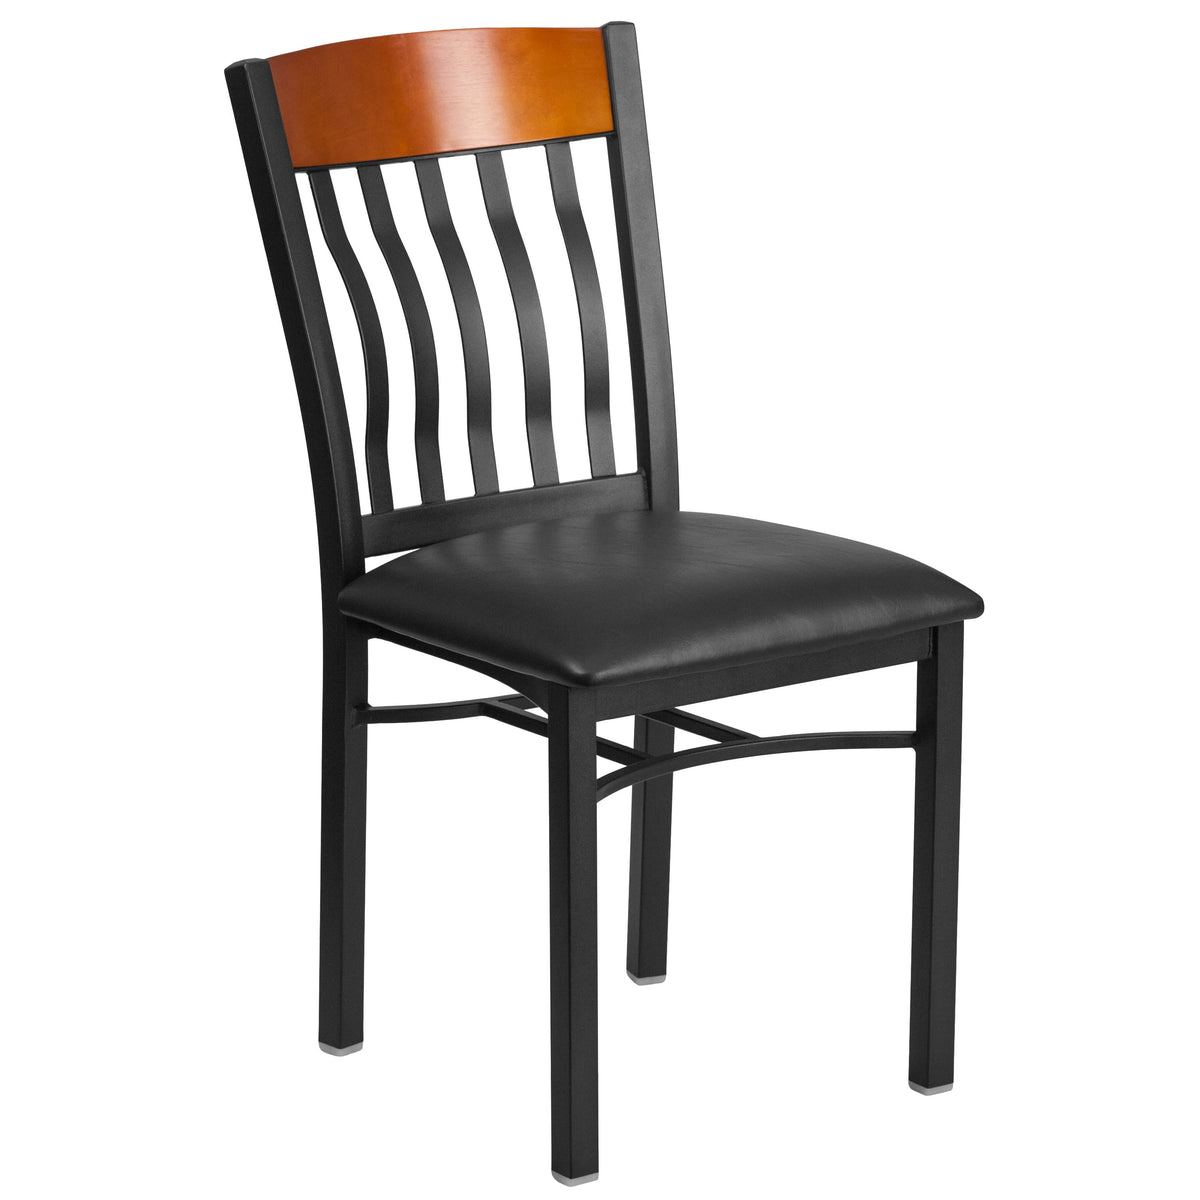 Cherry |#| Vertical Back Black Metal & Cherry Wood Restaurant Chair w/ Black Vinyl Seat